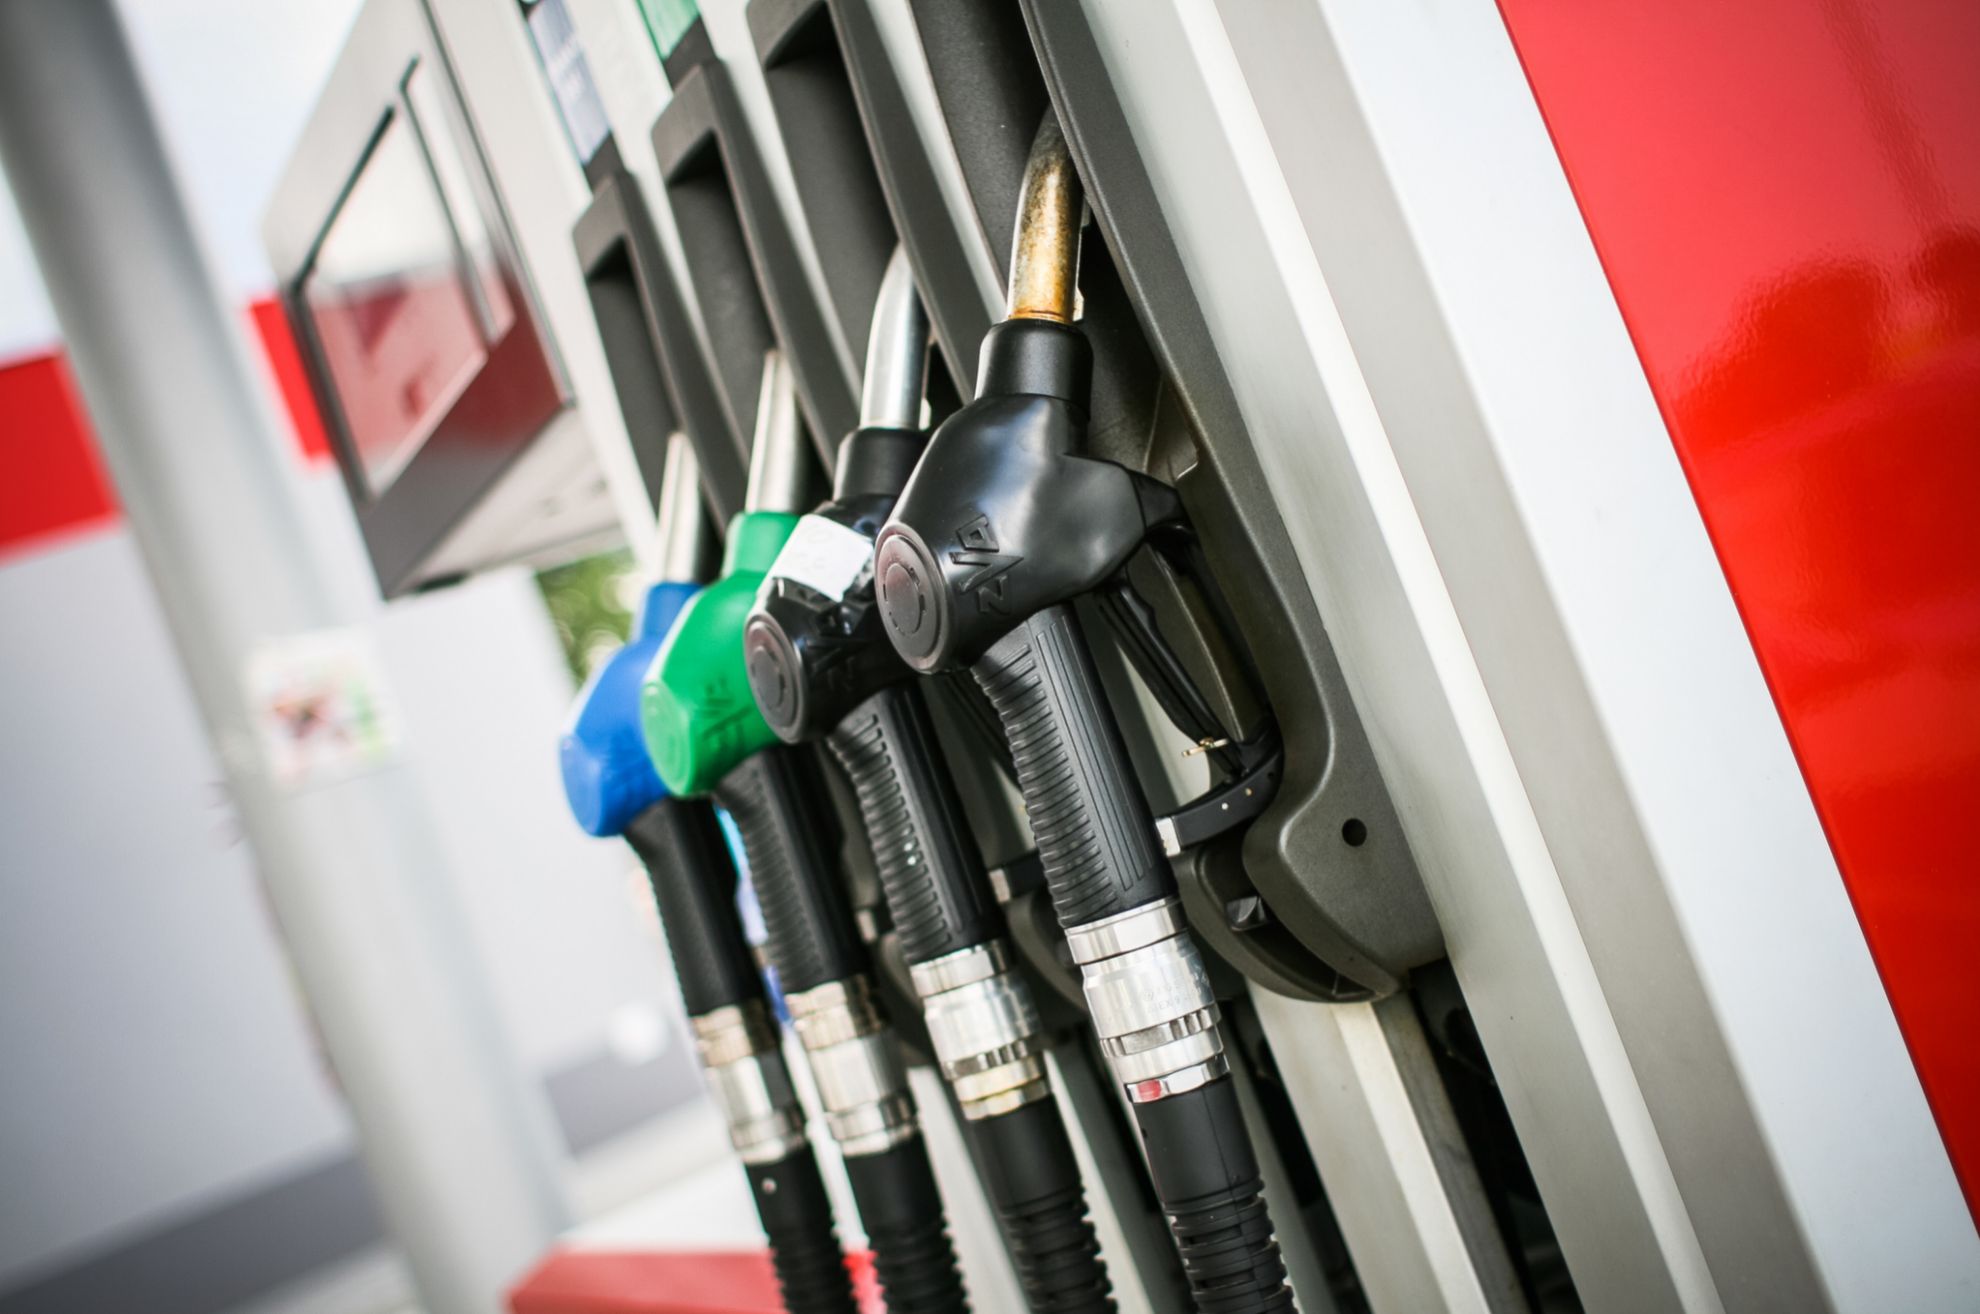 precios combustibles - gasolina - diesel - record historico - Nadia Calviño - 20 centimos